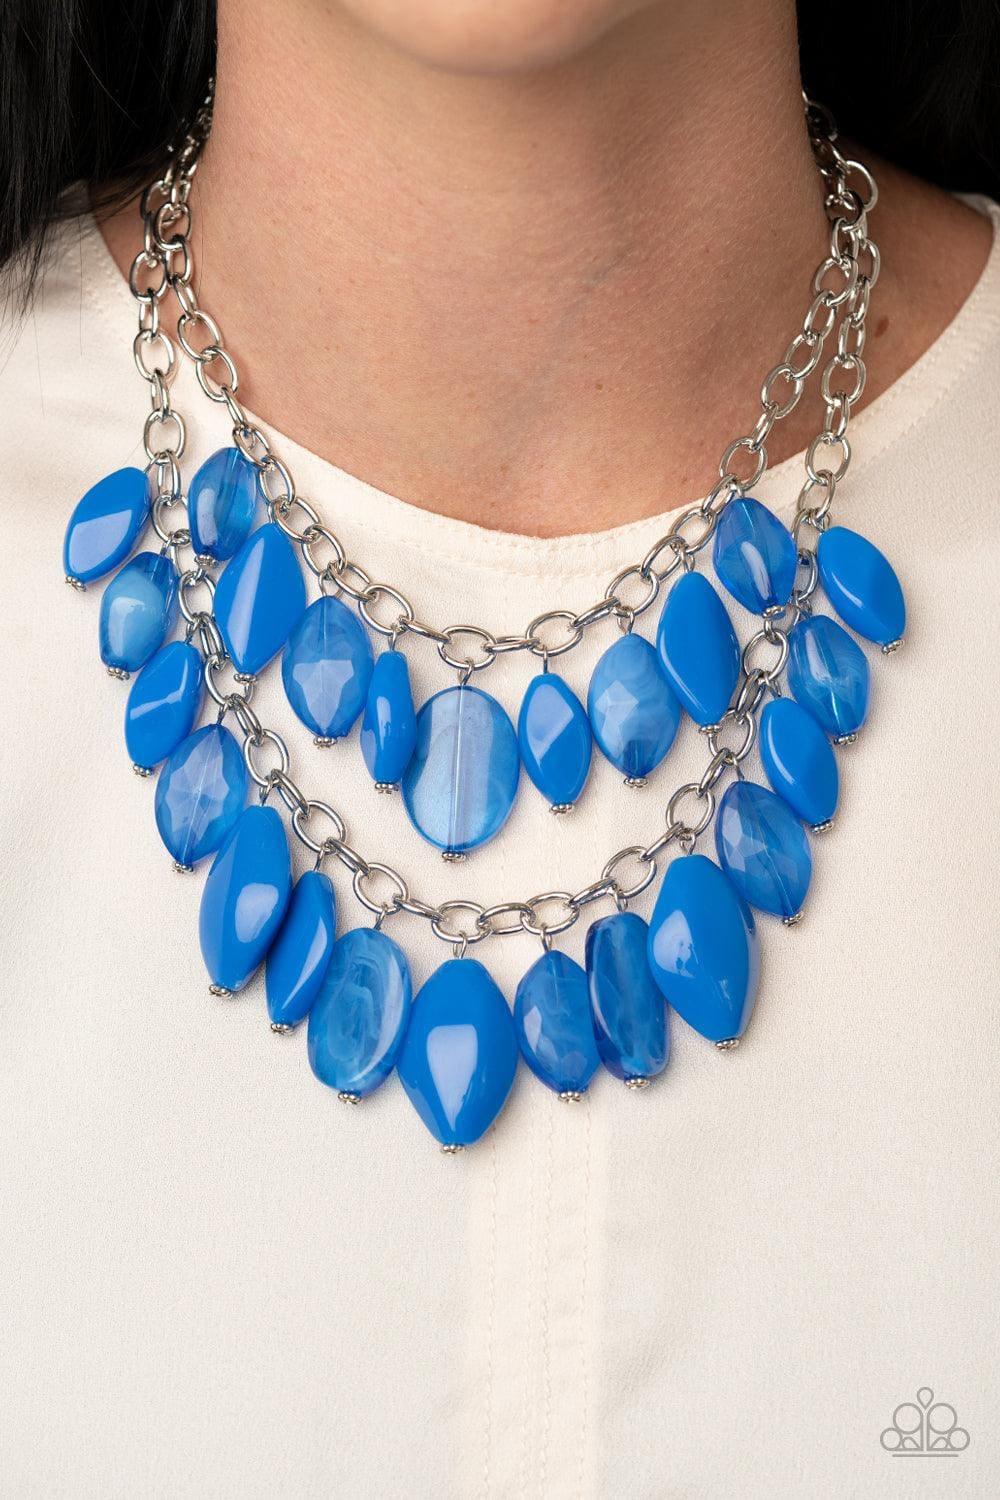 Paparazzi Accessories - Palm Beach Beauty - Blue Necklace - Bling by JessieK